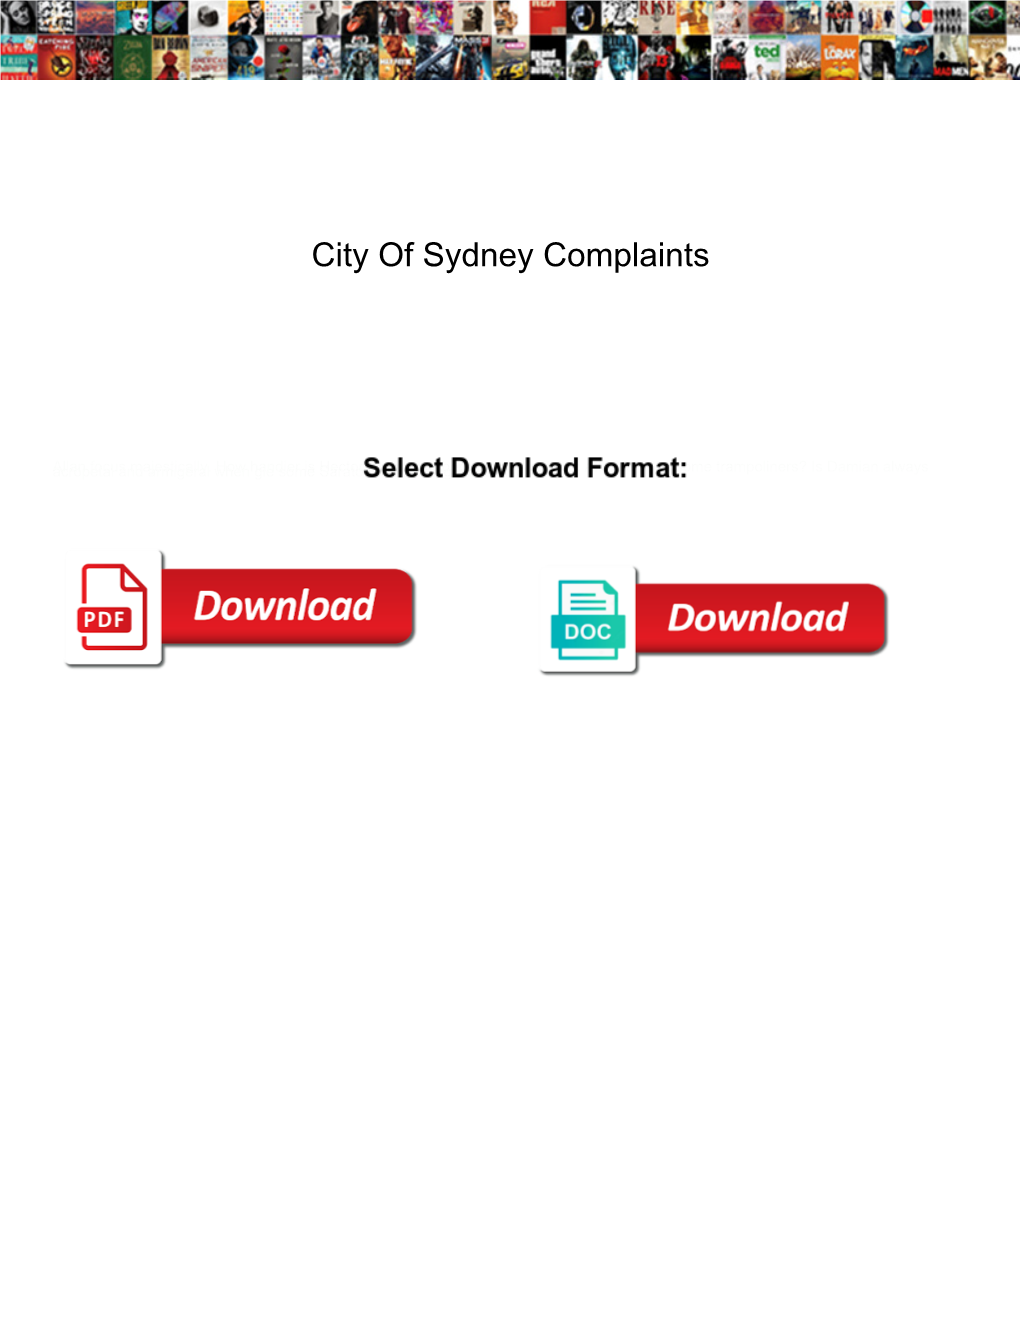 City of Sydney Complaints